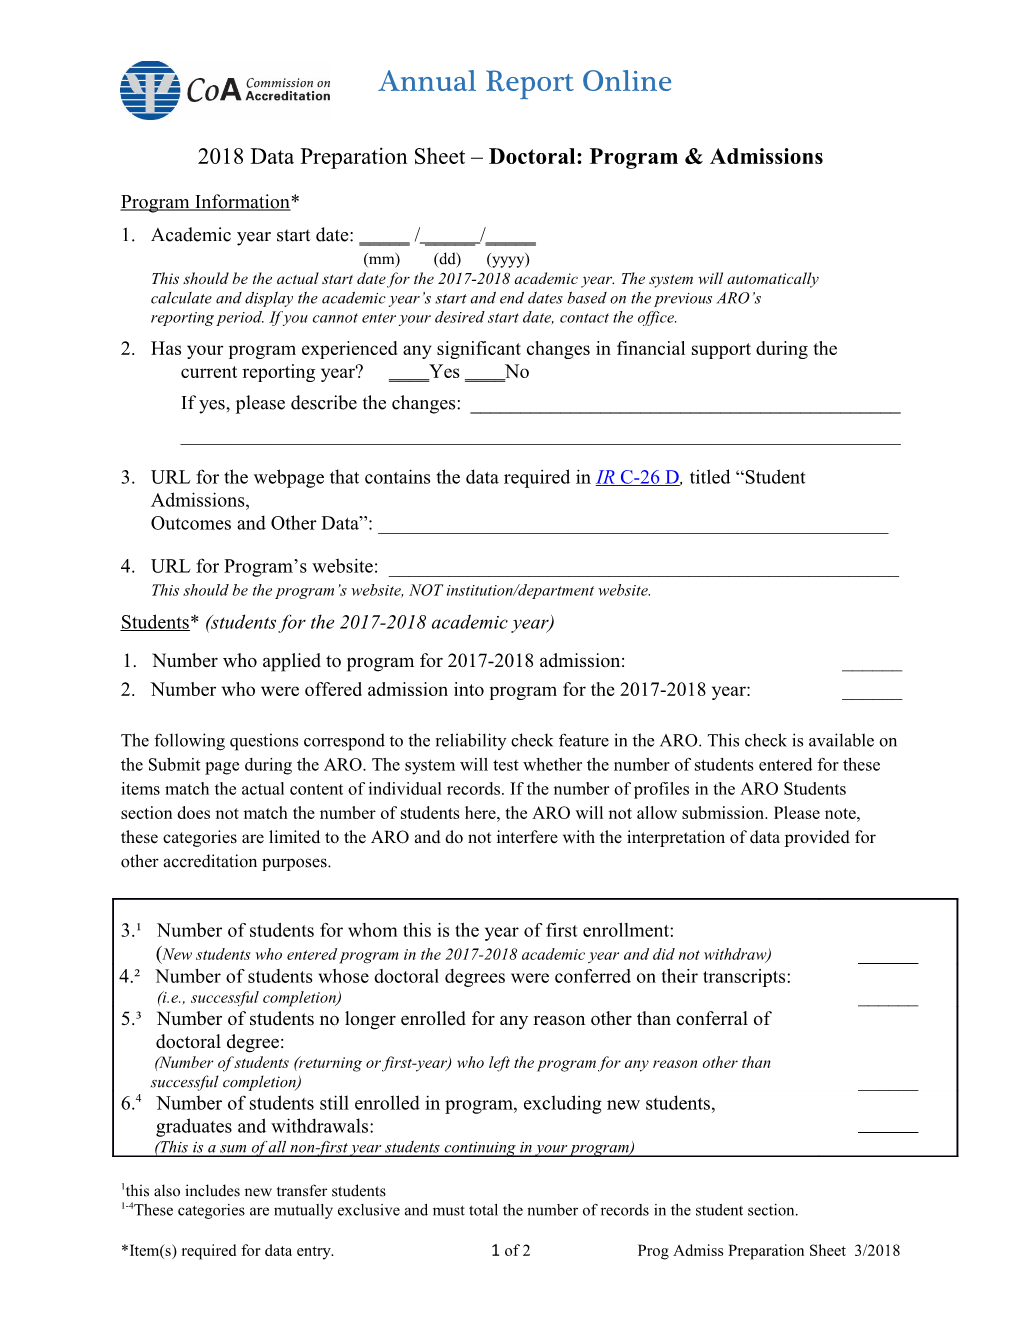 2018 Data Preparation Sheet Doctoral: Program Admissions